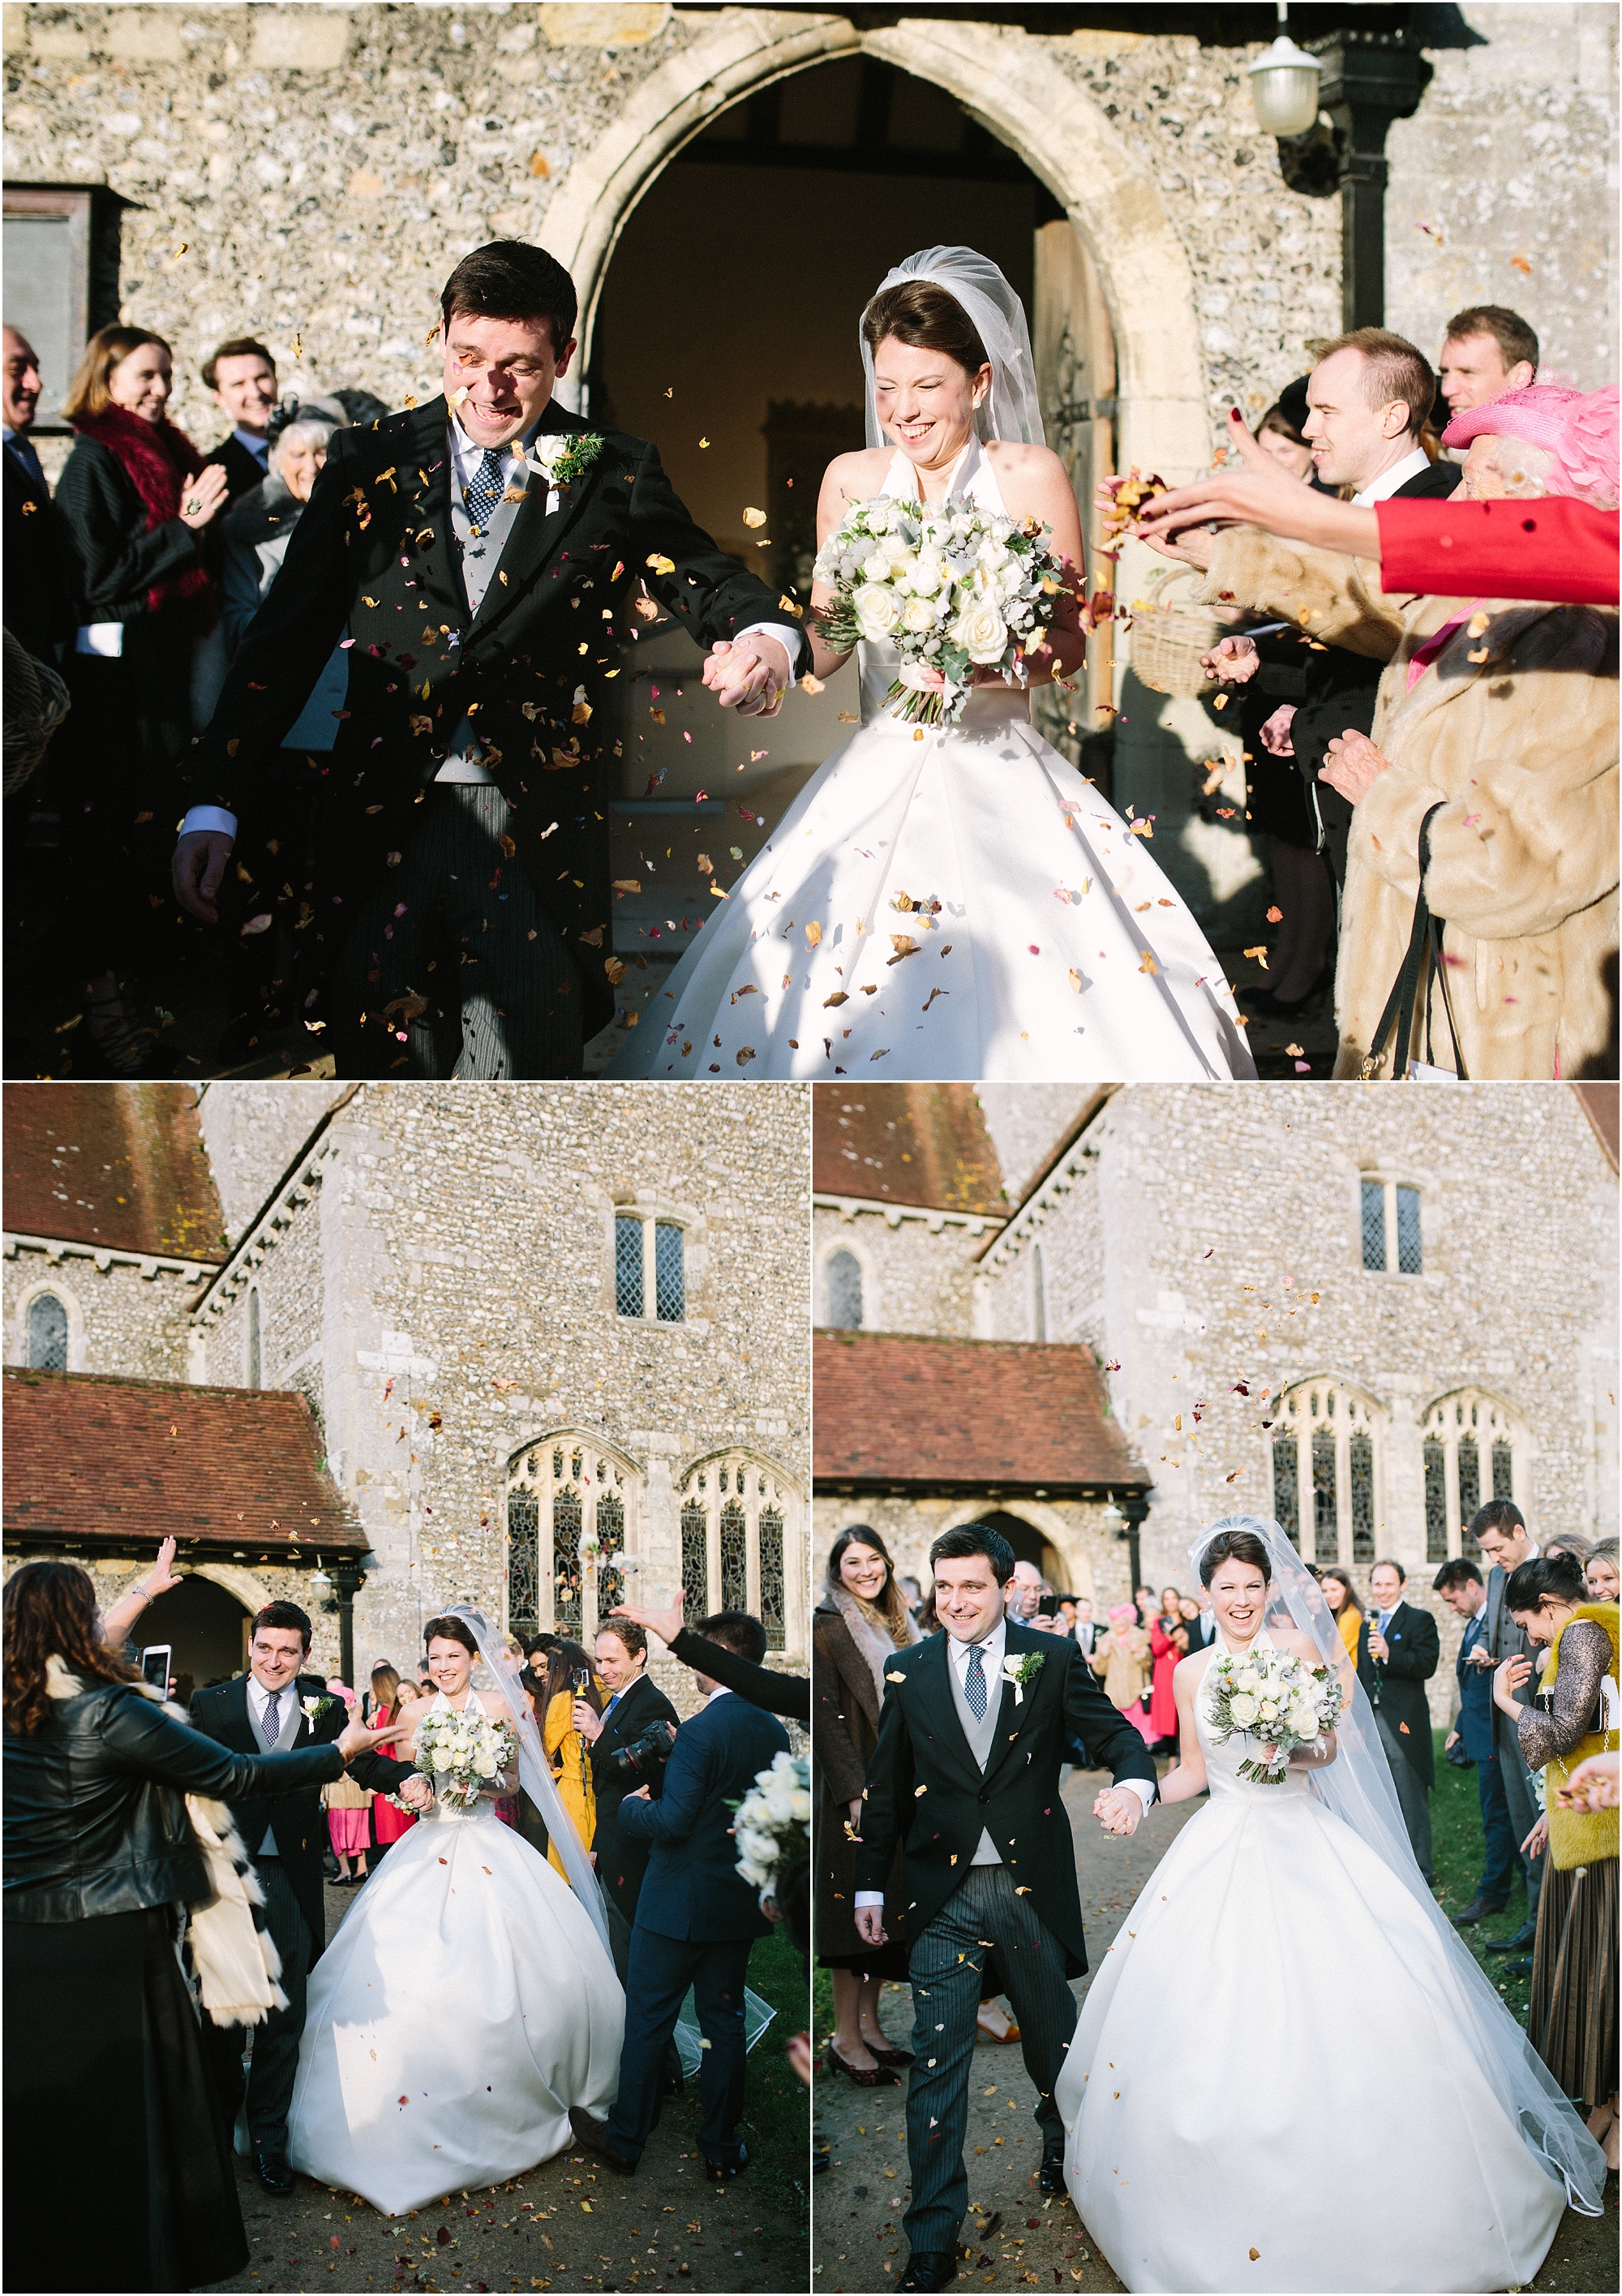 Bride and groom walking through confetti